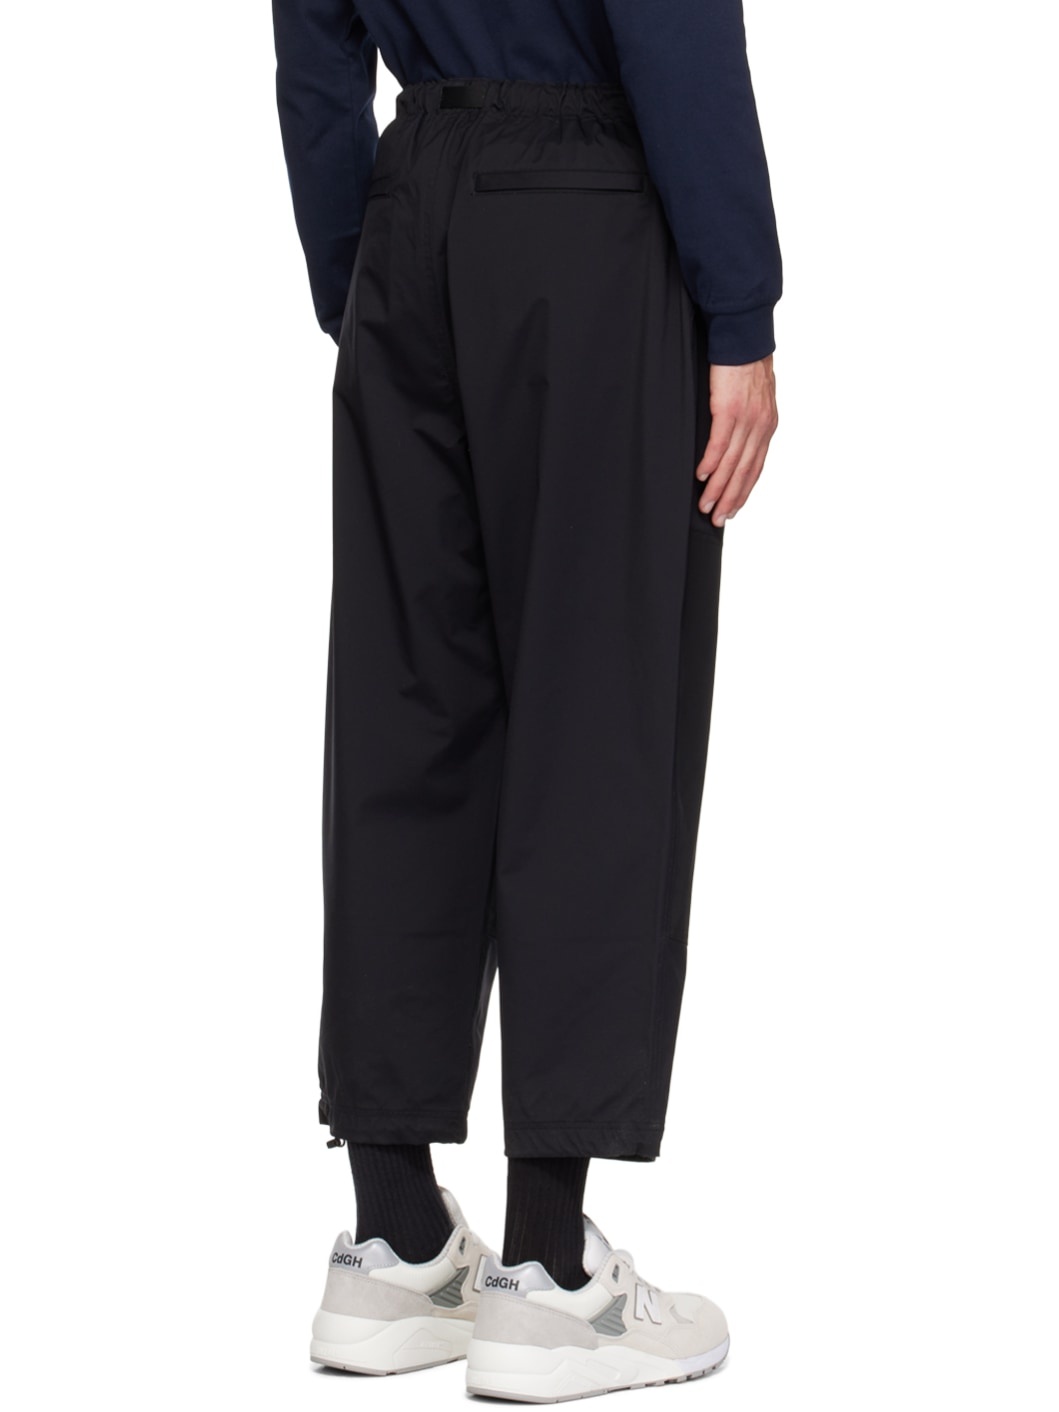 Black Paneled Trousers - 3